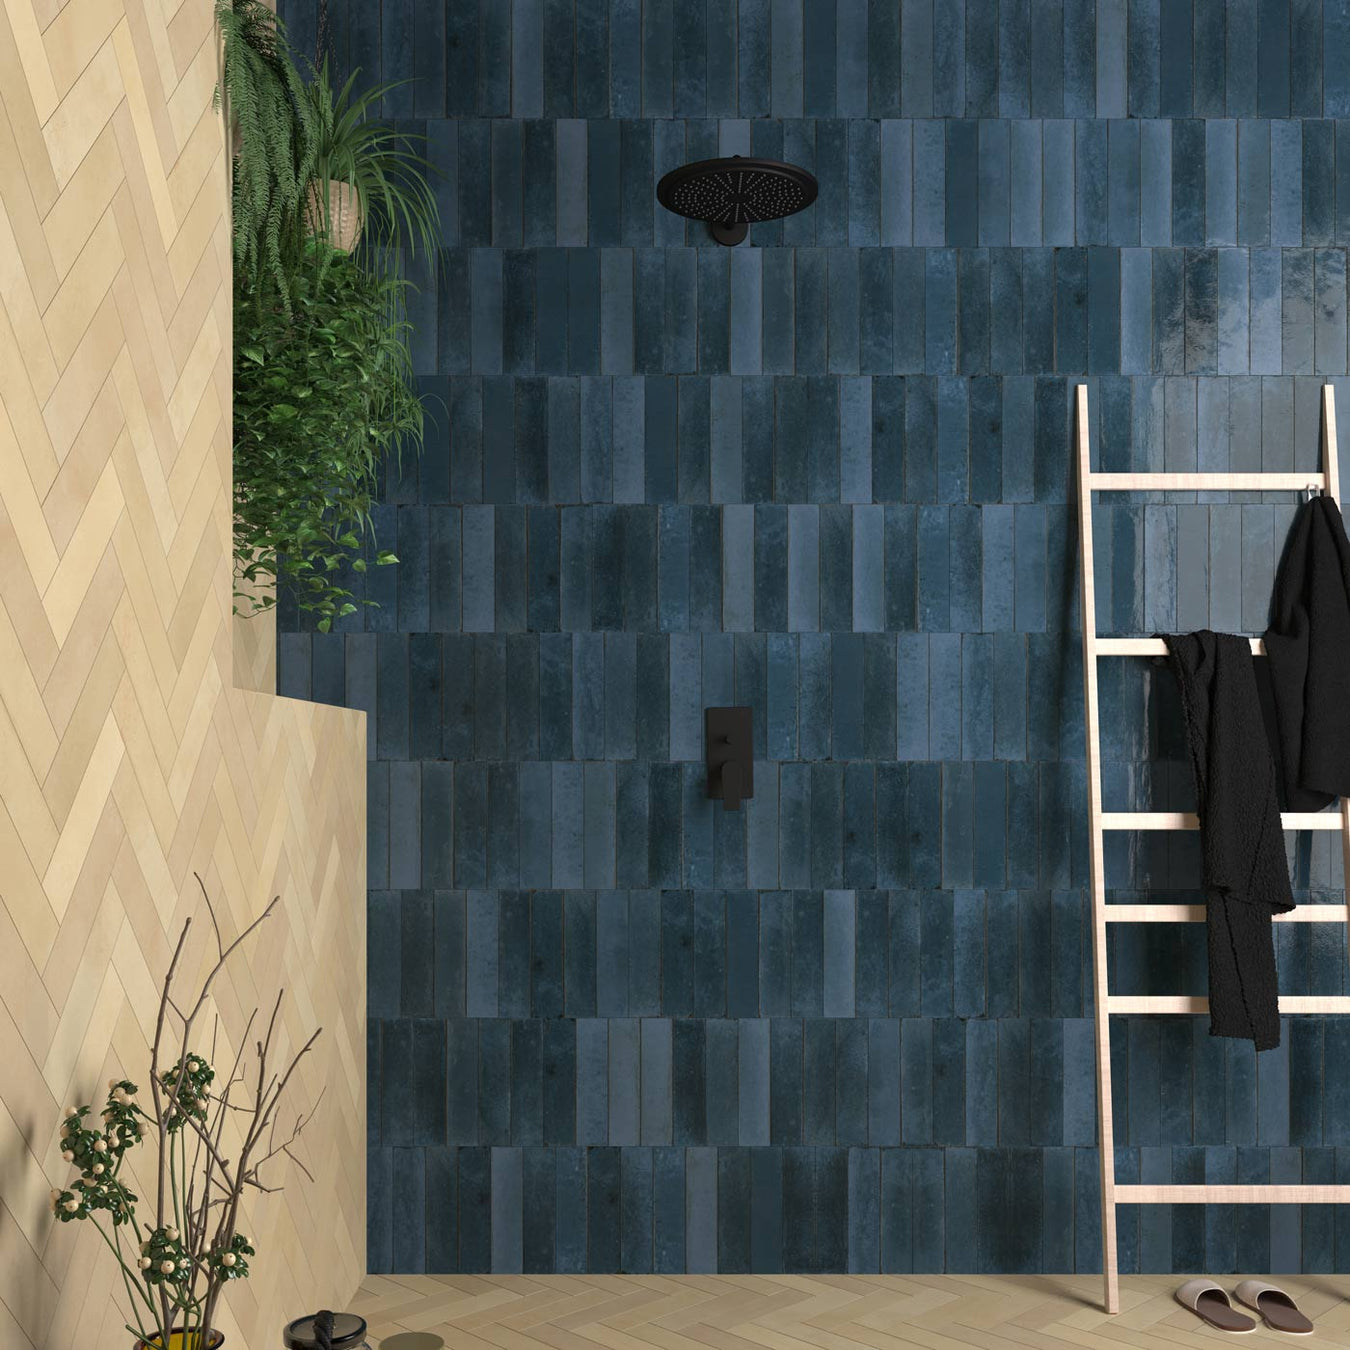 Blue kitchen wall tiles